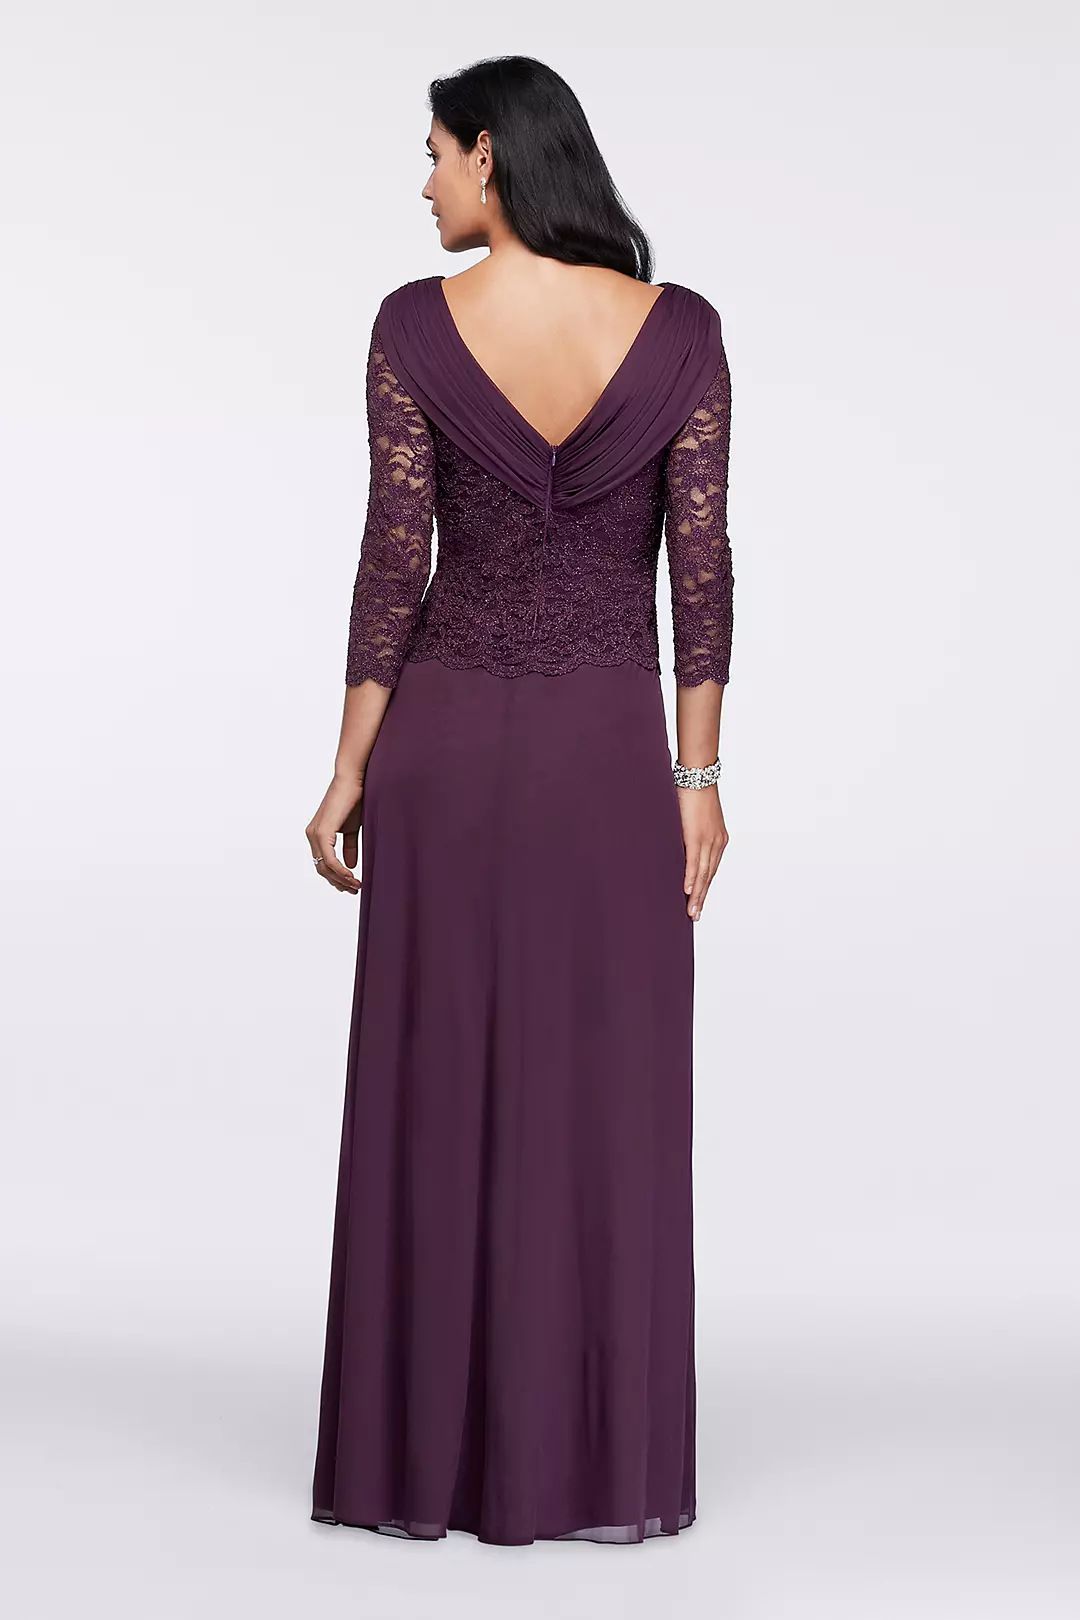 Long-Sleeve Lace Bodice Dress with Bateau Neckline Image 2